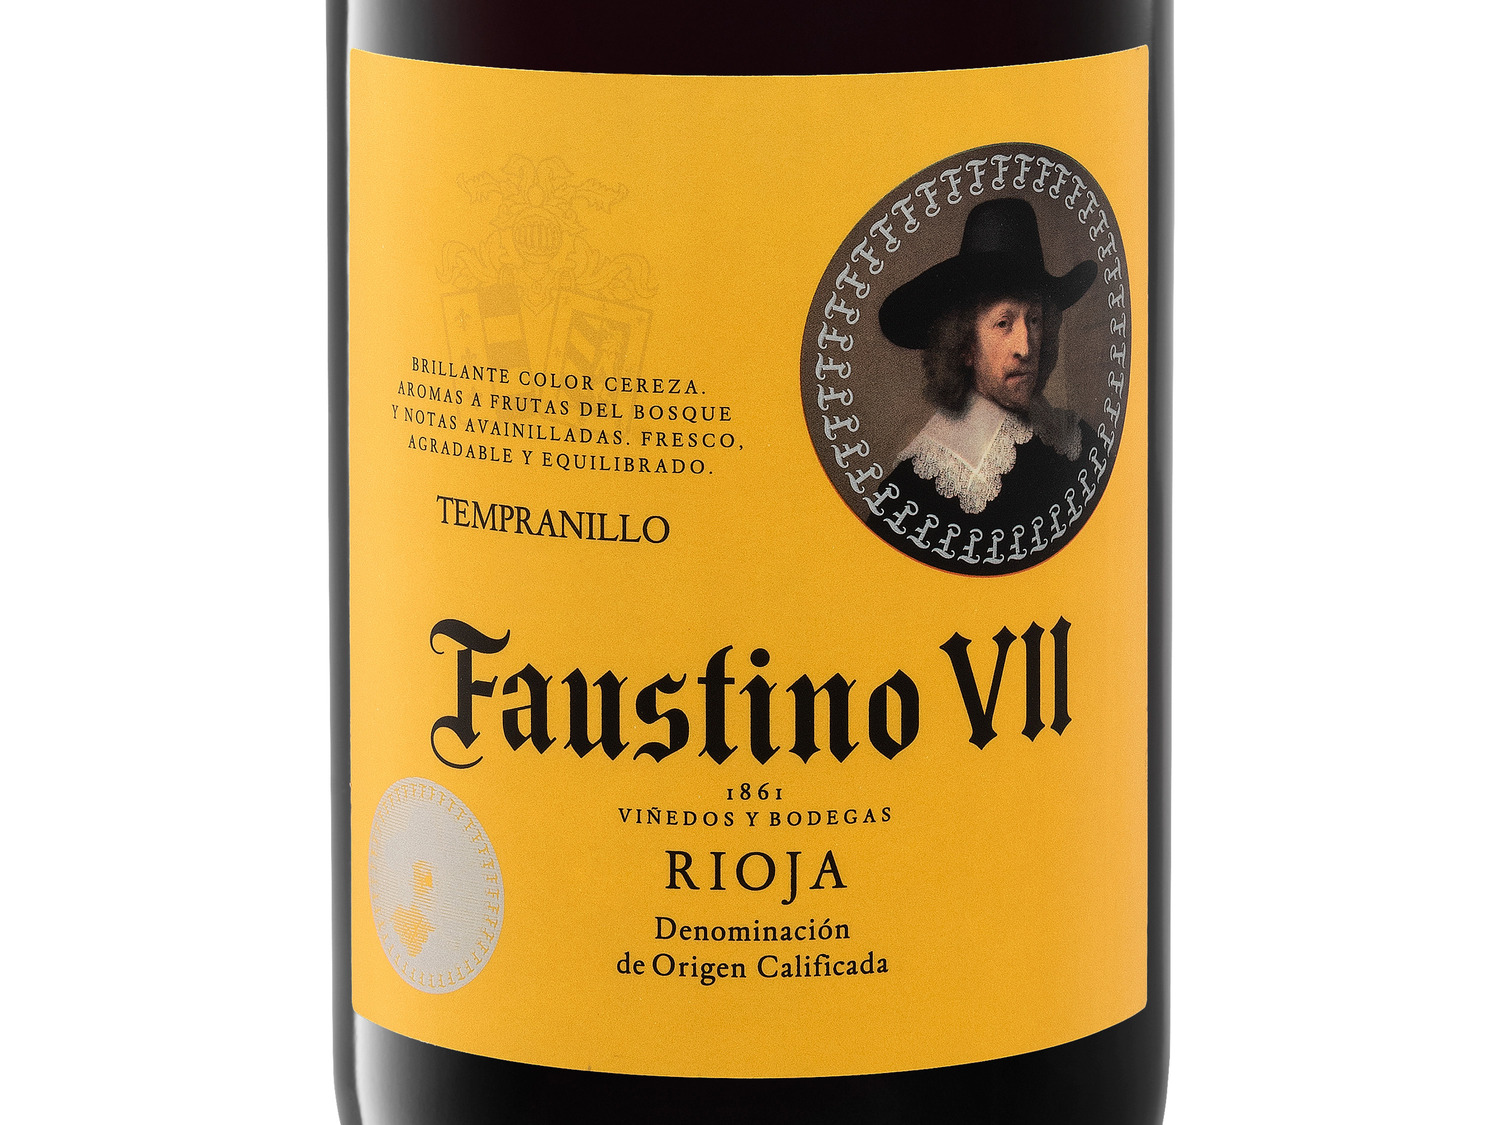 Rioja DOCa Rotwein 2… Tempranillo Faustino VII trocken,